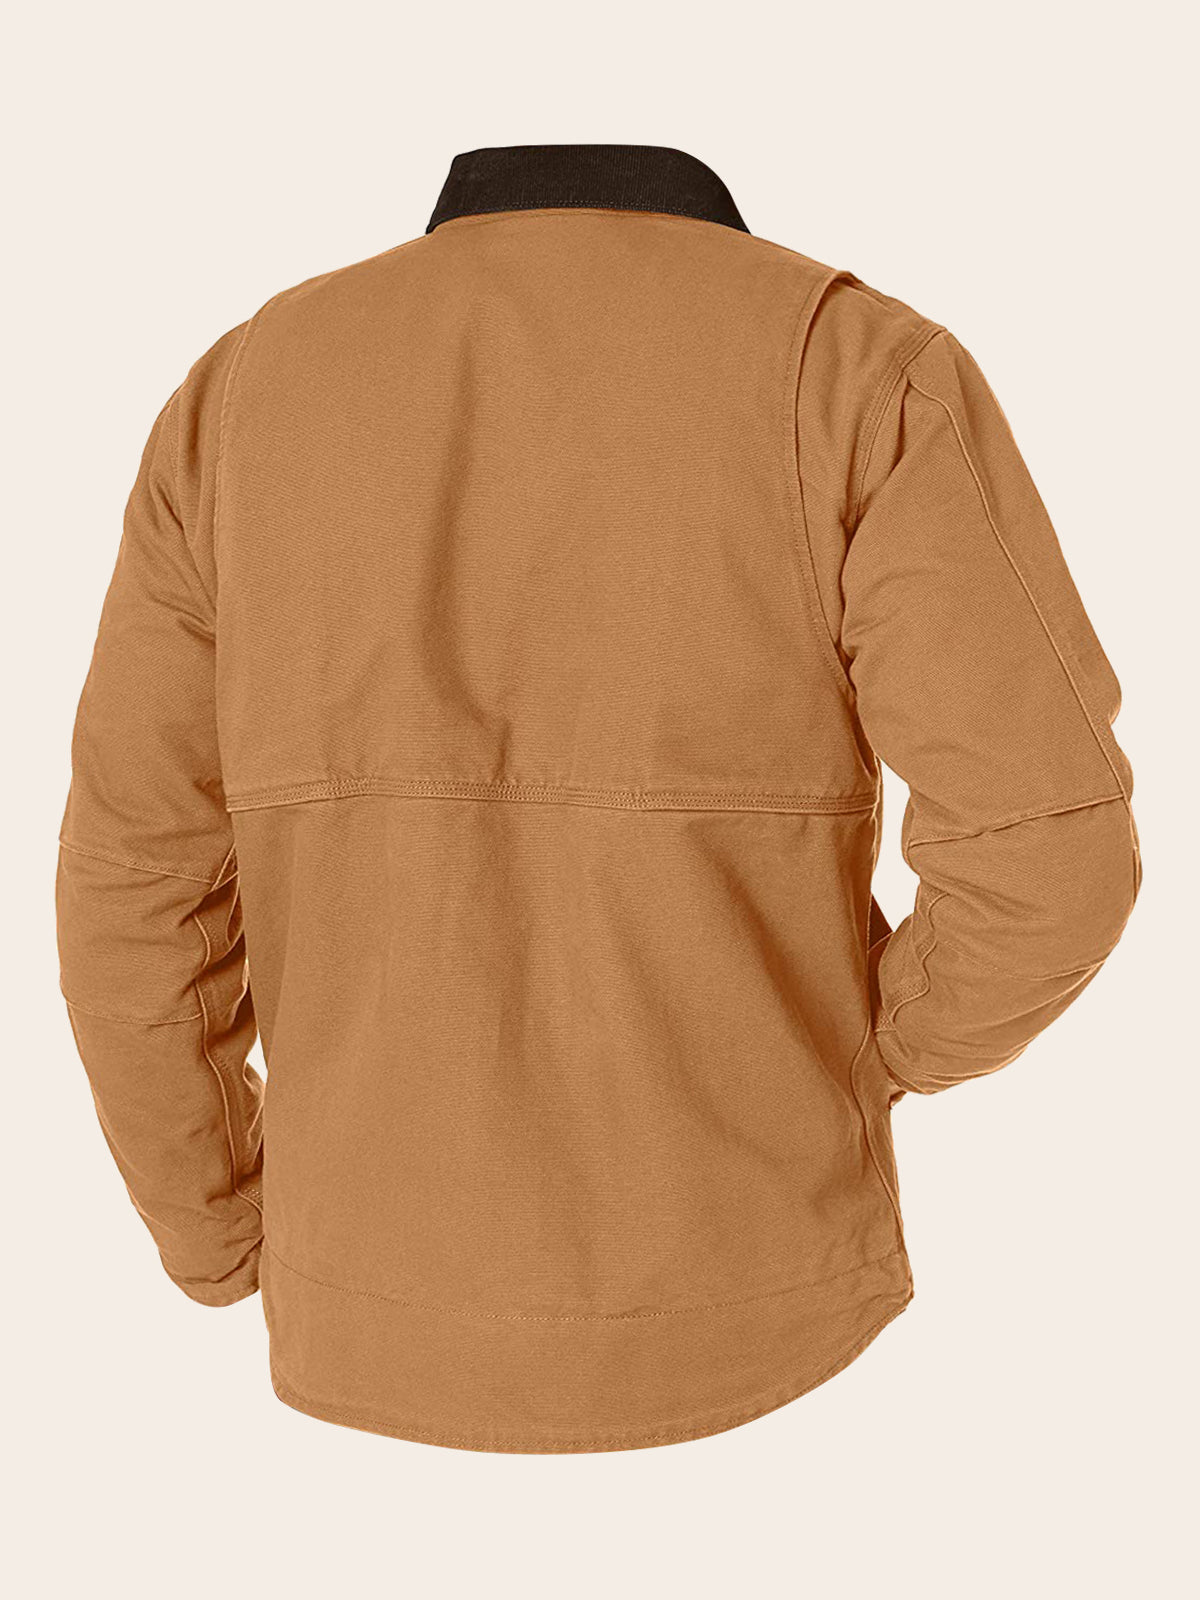 Lavish Brown Cotton Jacket For Men